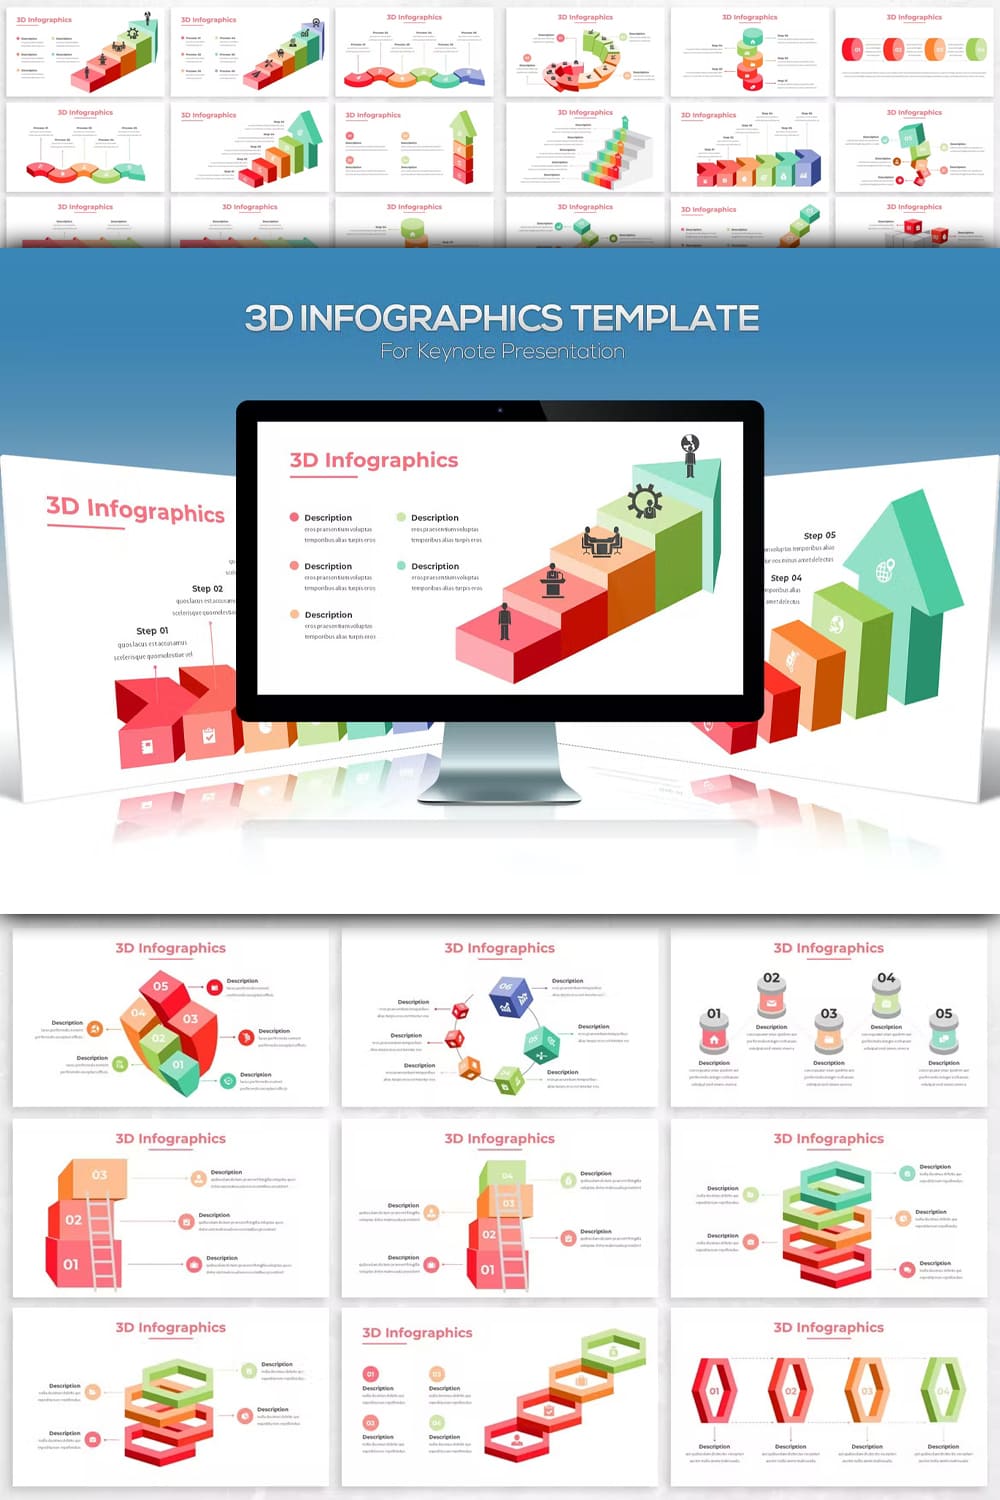 3d infographics for keynote presentation - pinterest image preview.